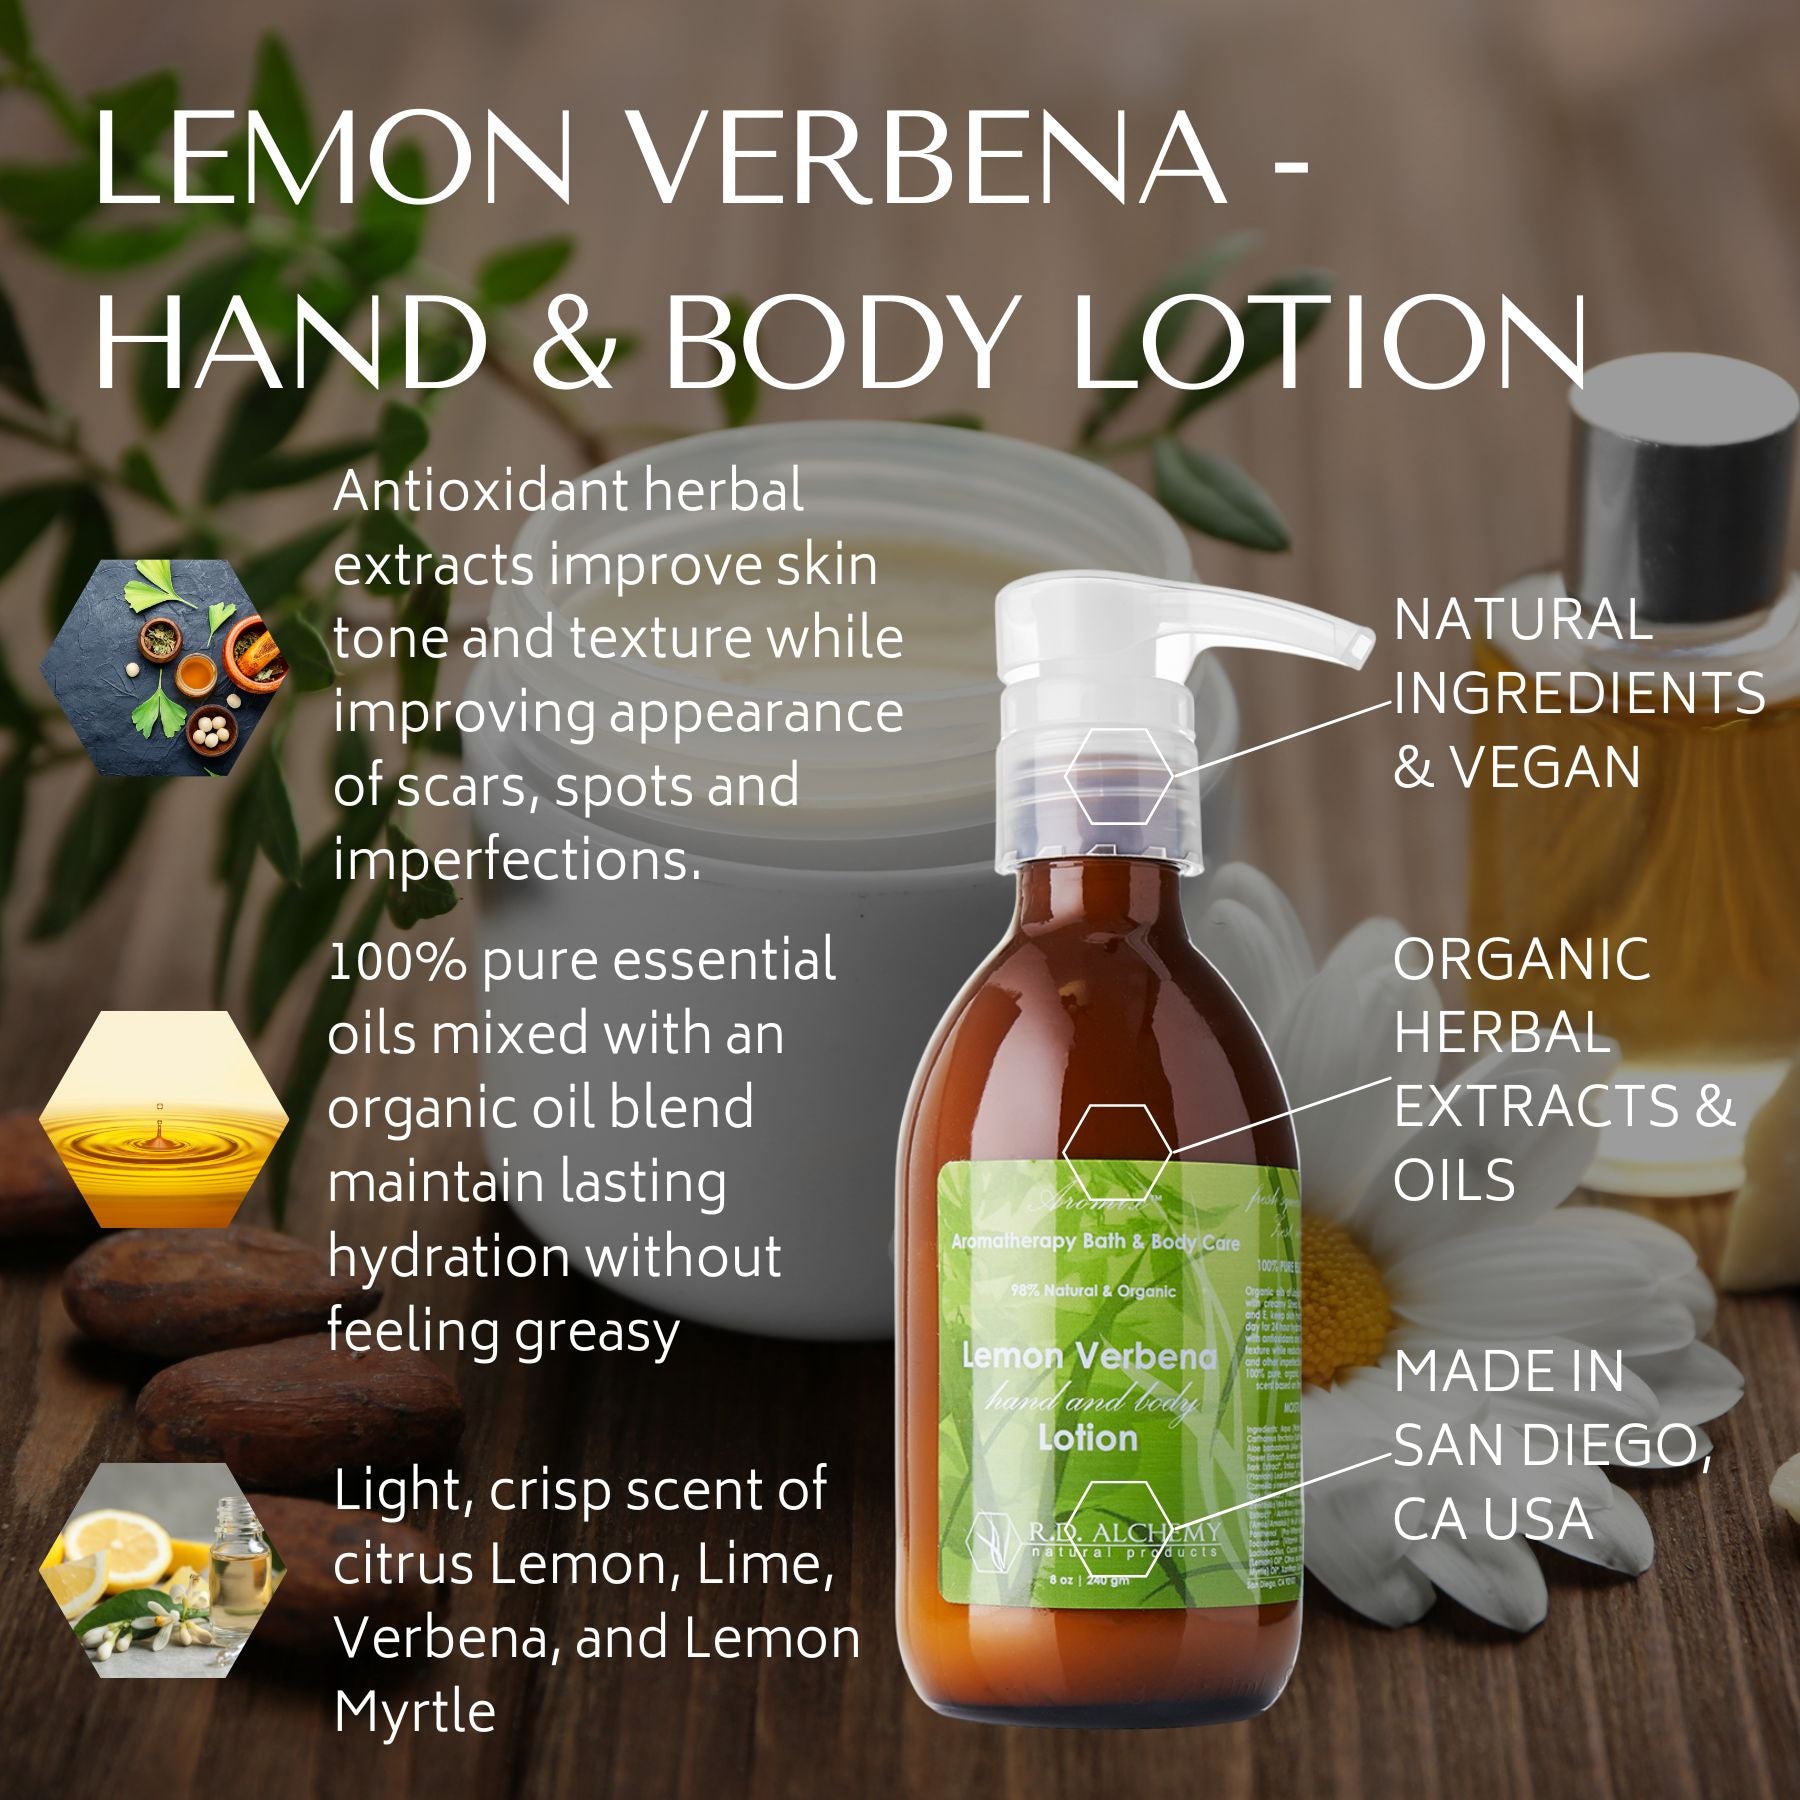 Almond Oil Handy & Body Lotion Infused with Lemon Verbena, 24 oz